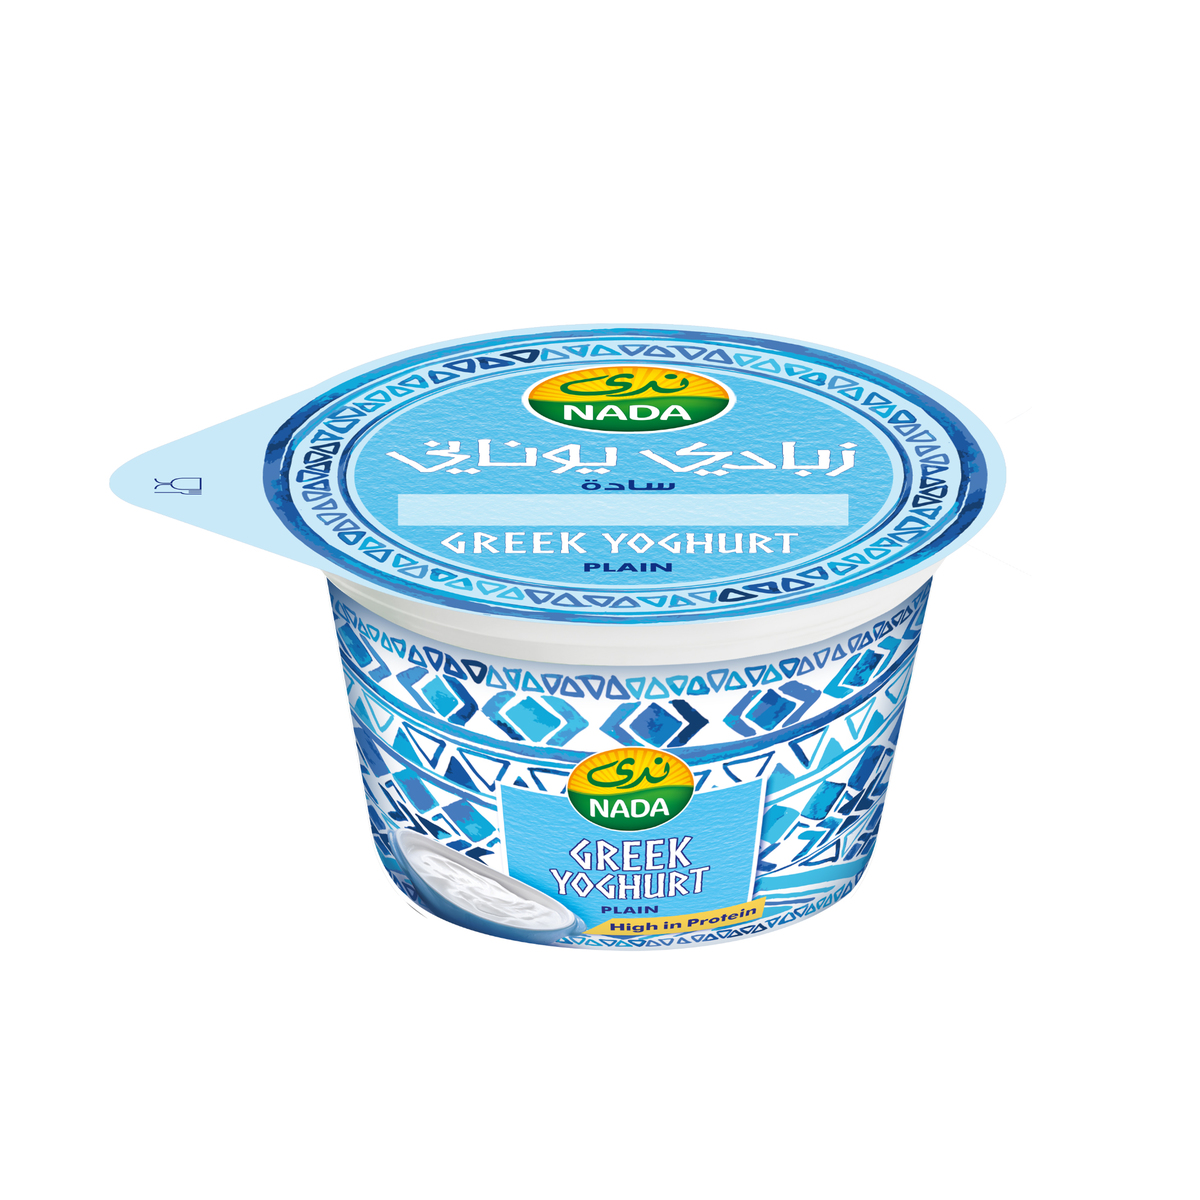 Nada Greek Yoghurt Plain 160g